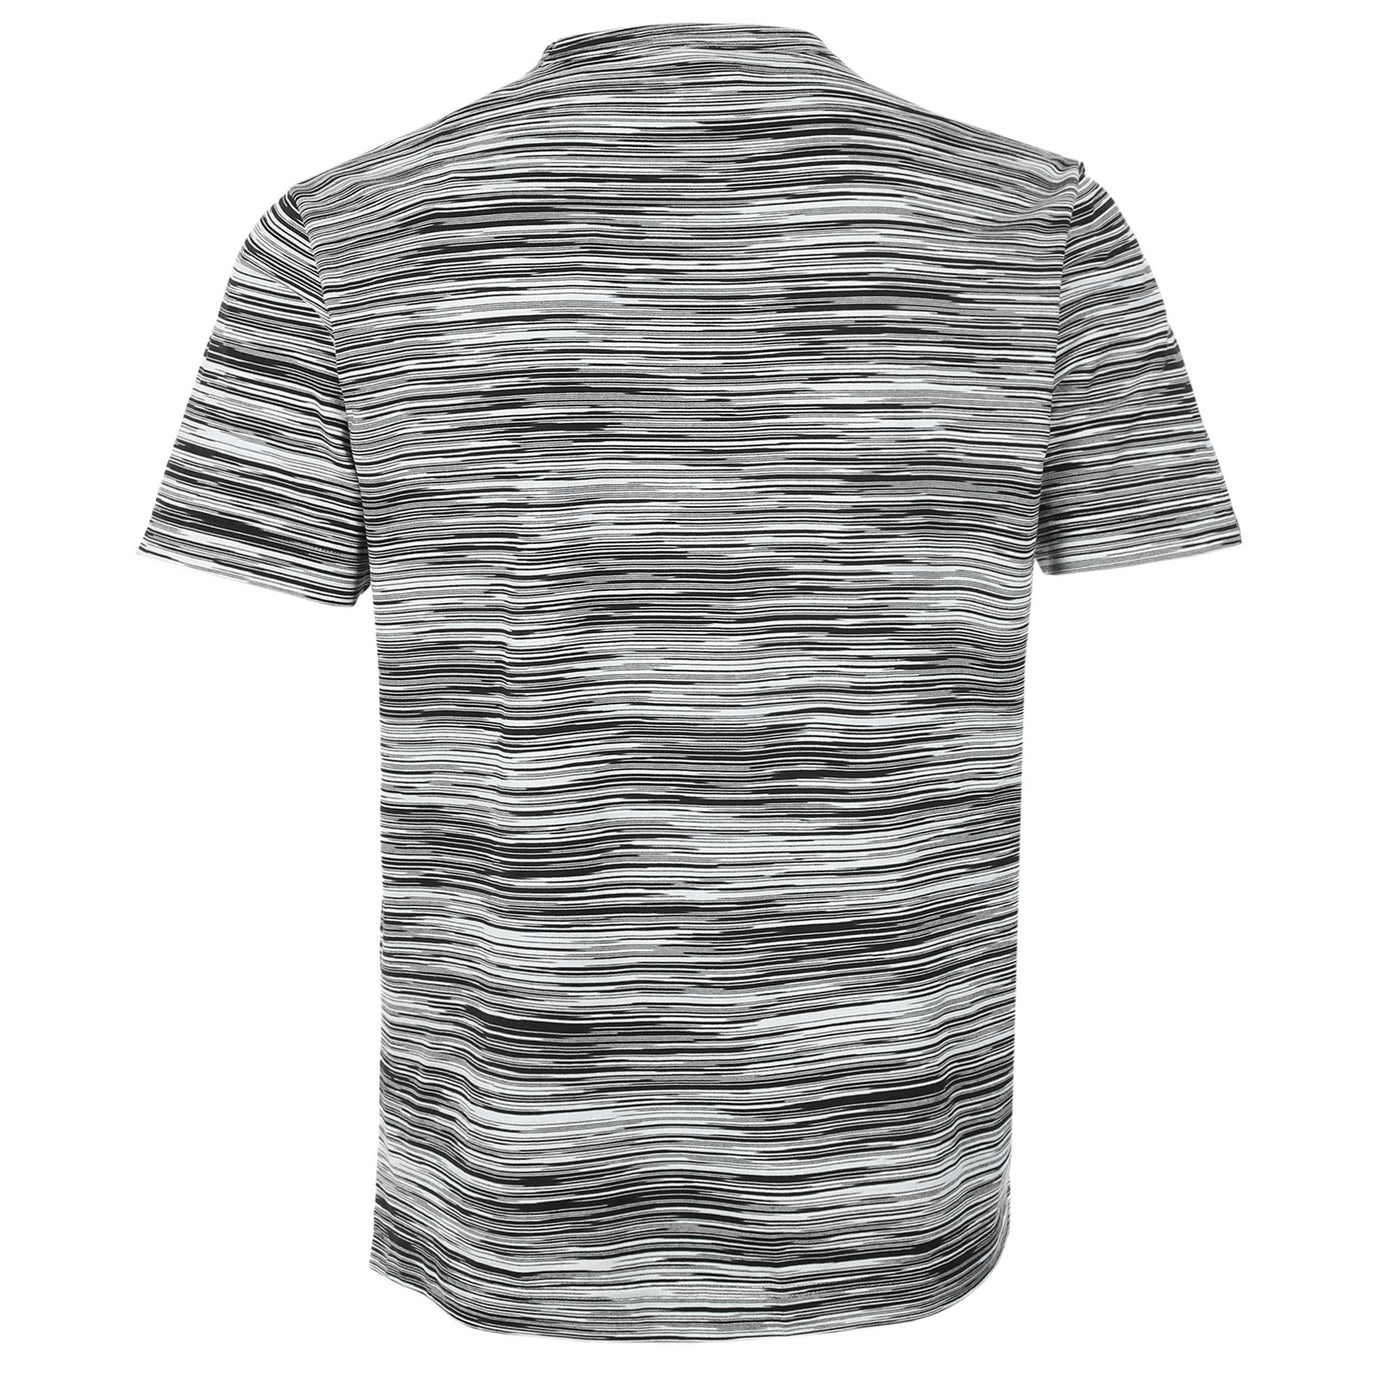 Missoni Space Dye Stripe T-Shirt in Black Back